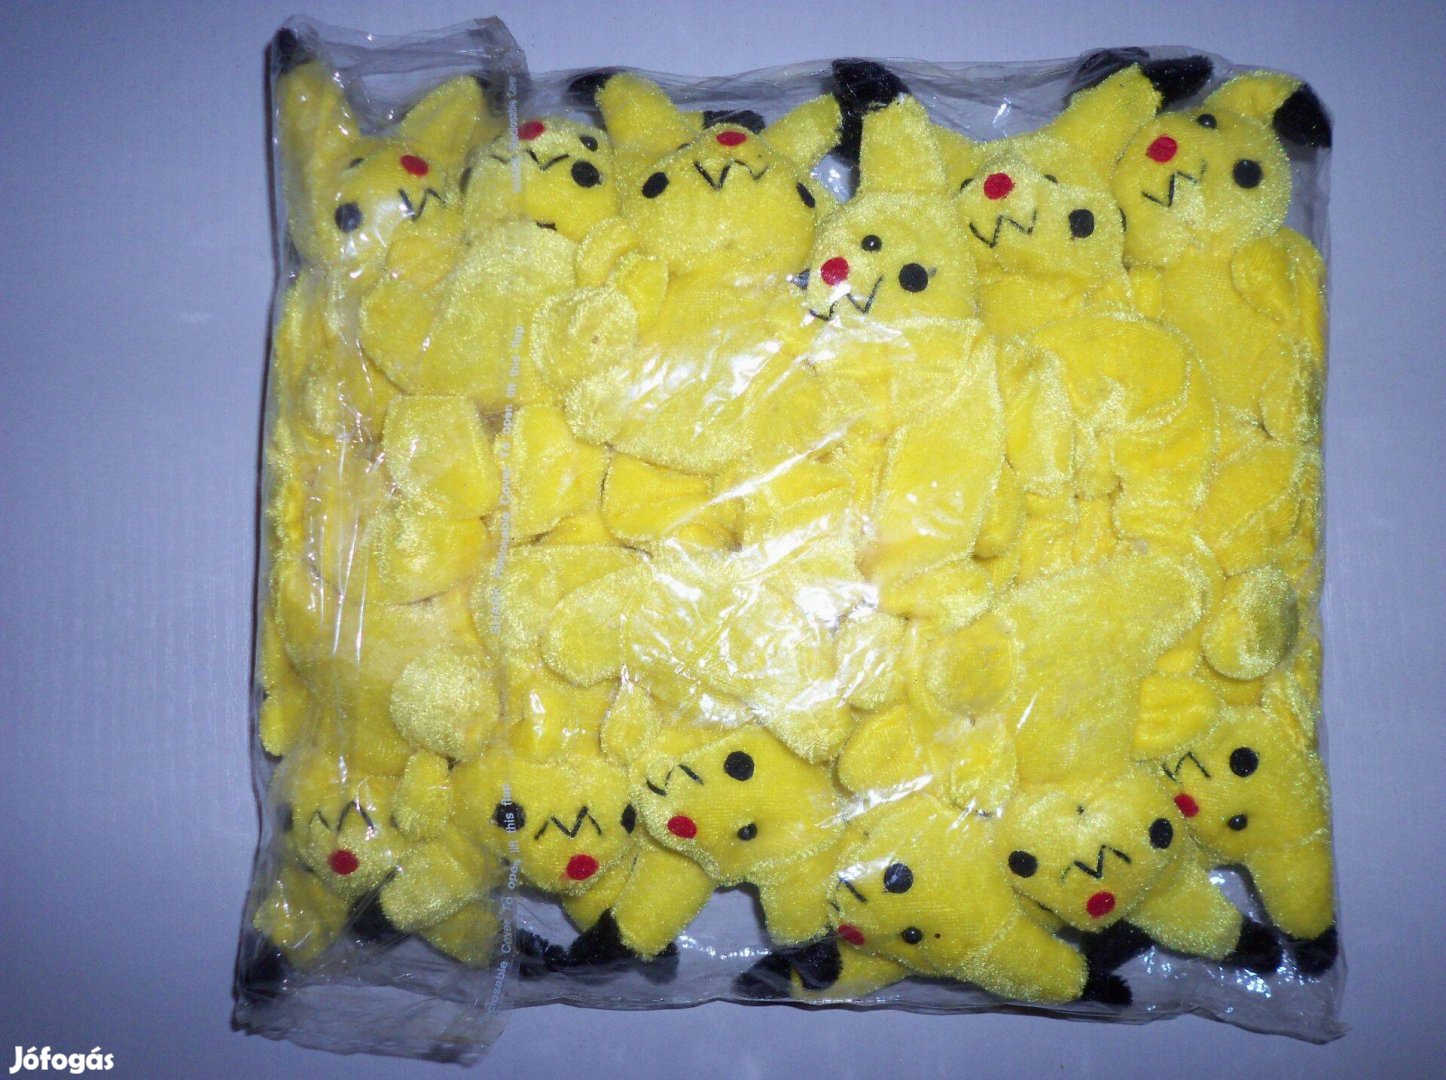 12 db Pokemon Pikachu plüss hajgumi - új